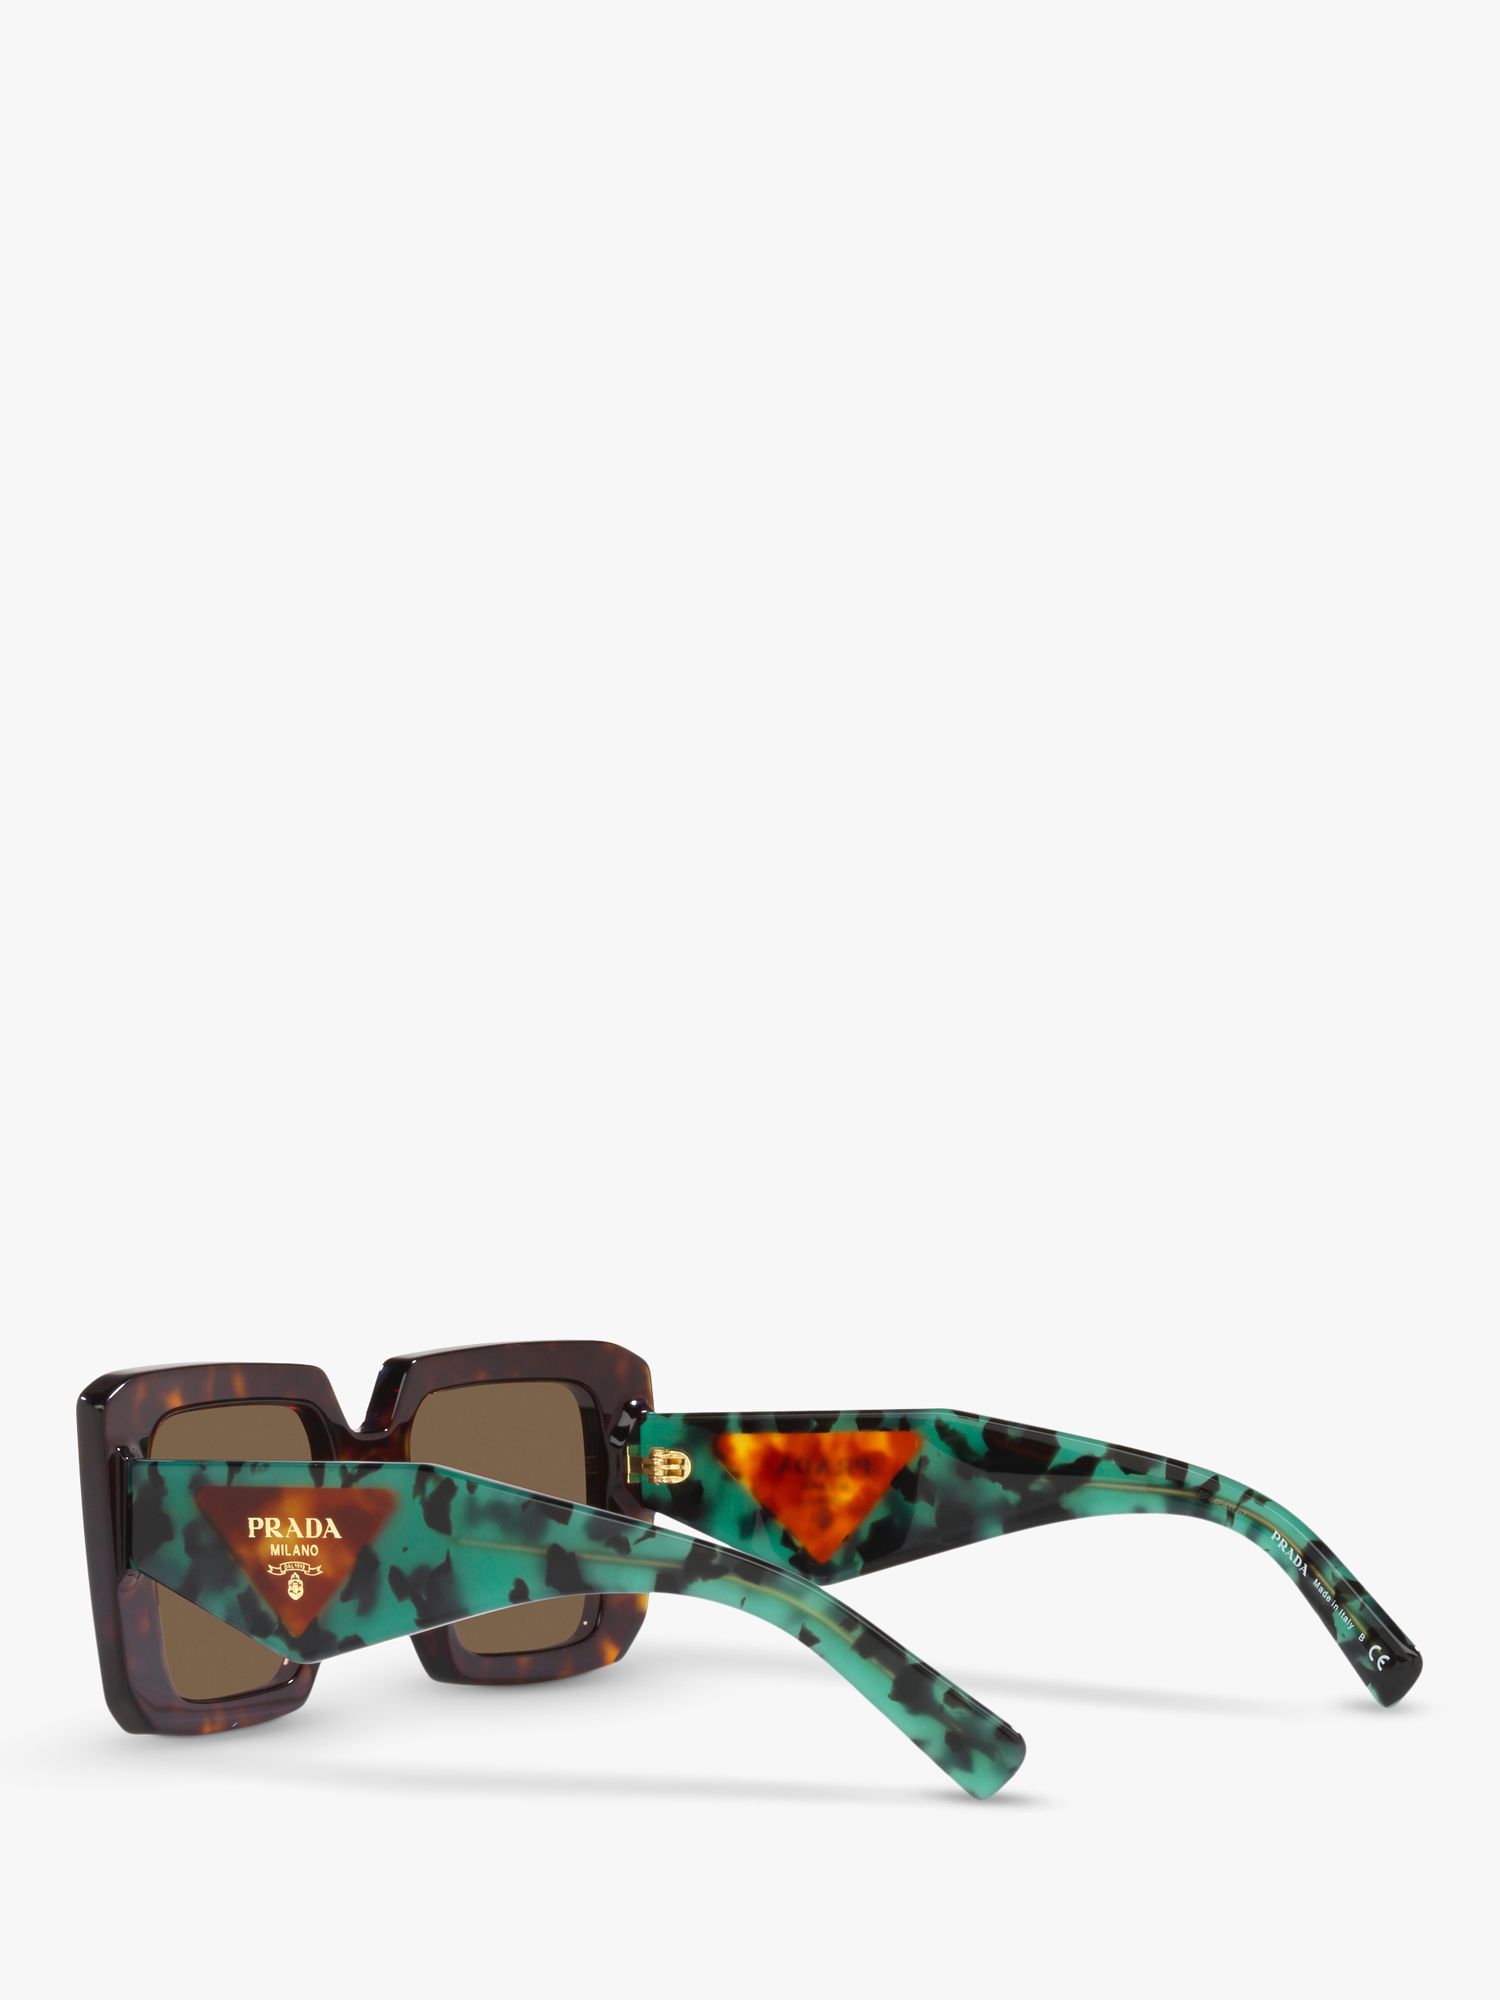 Prada PR 23YS Women's Chunky Square Sunglasses, Tortoise/Brown